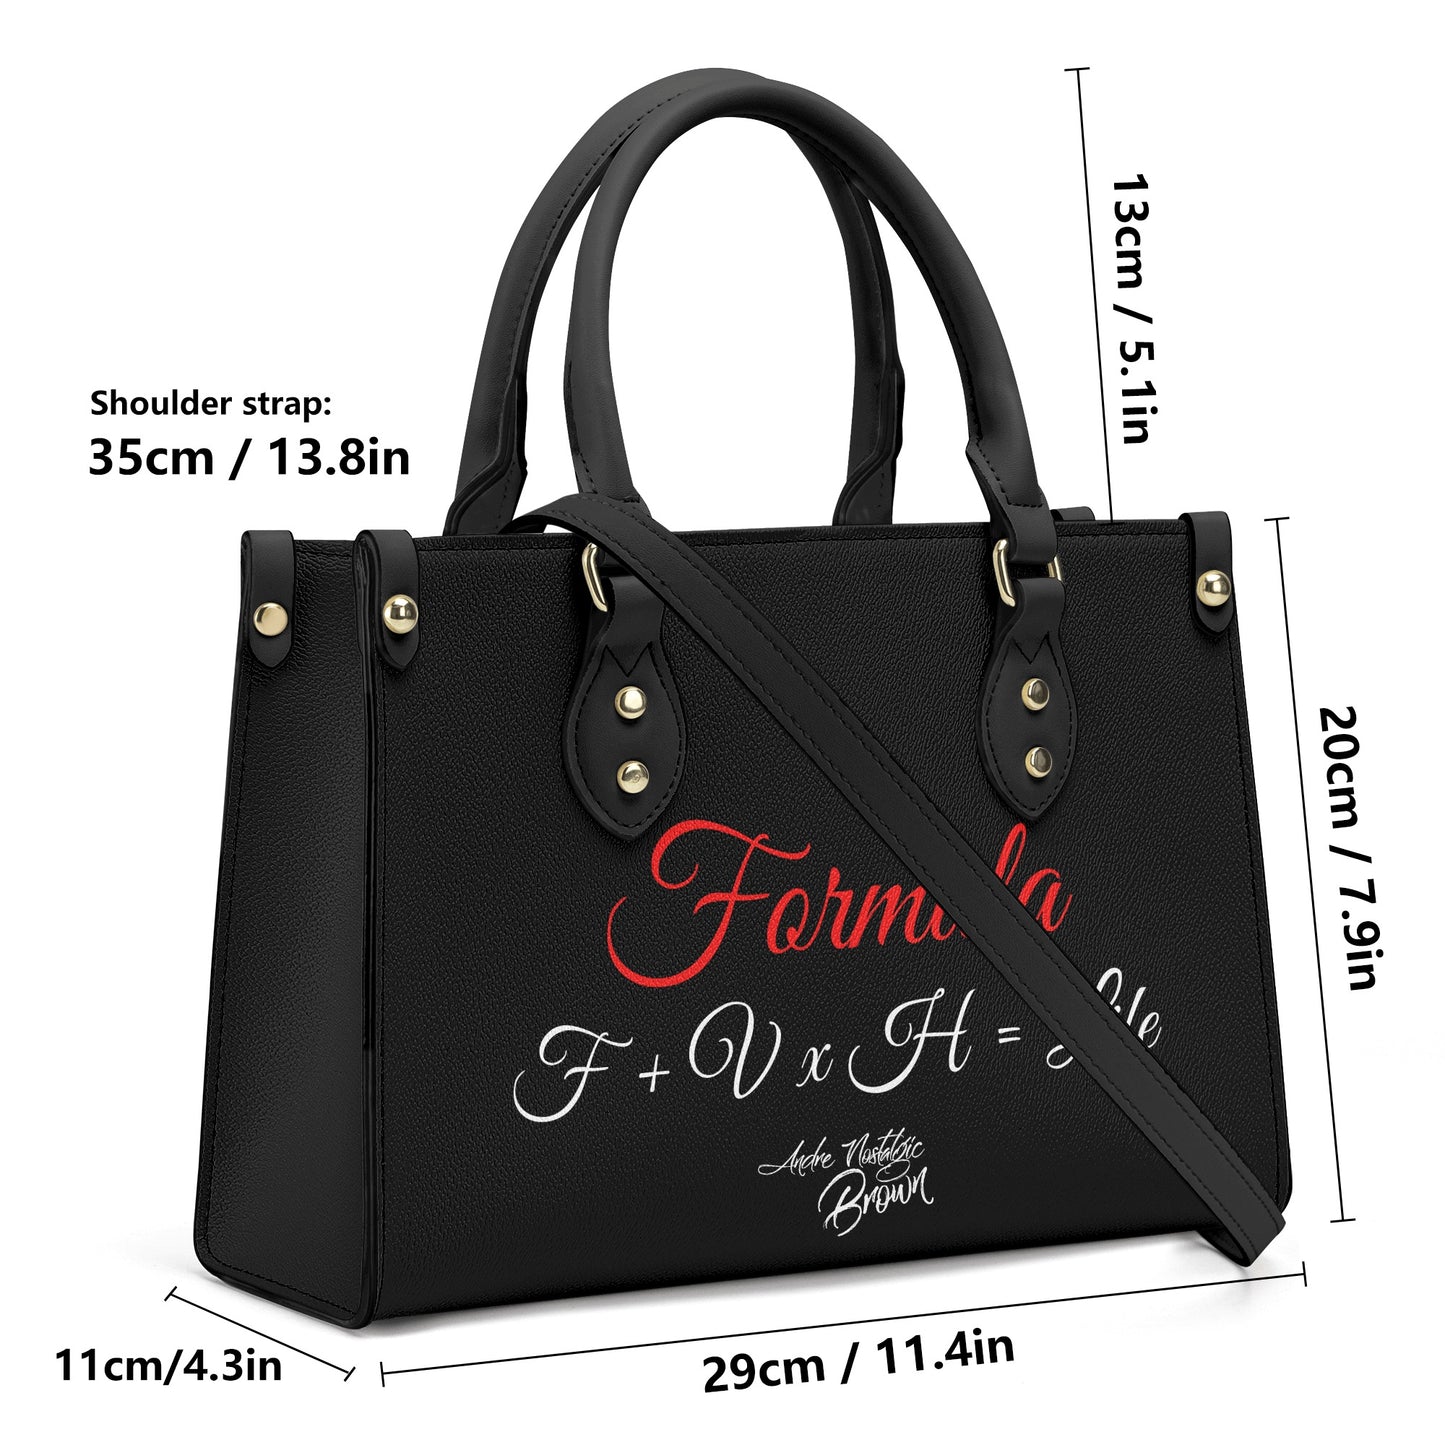 Formula F+ V x H = Life Luxury Women PU Handbag With Shoulder Strap